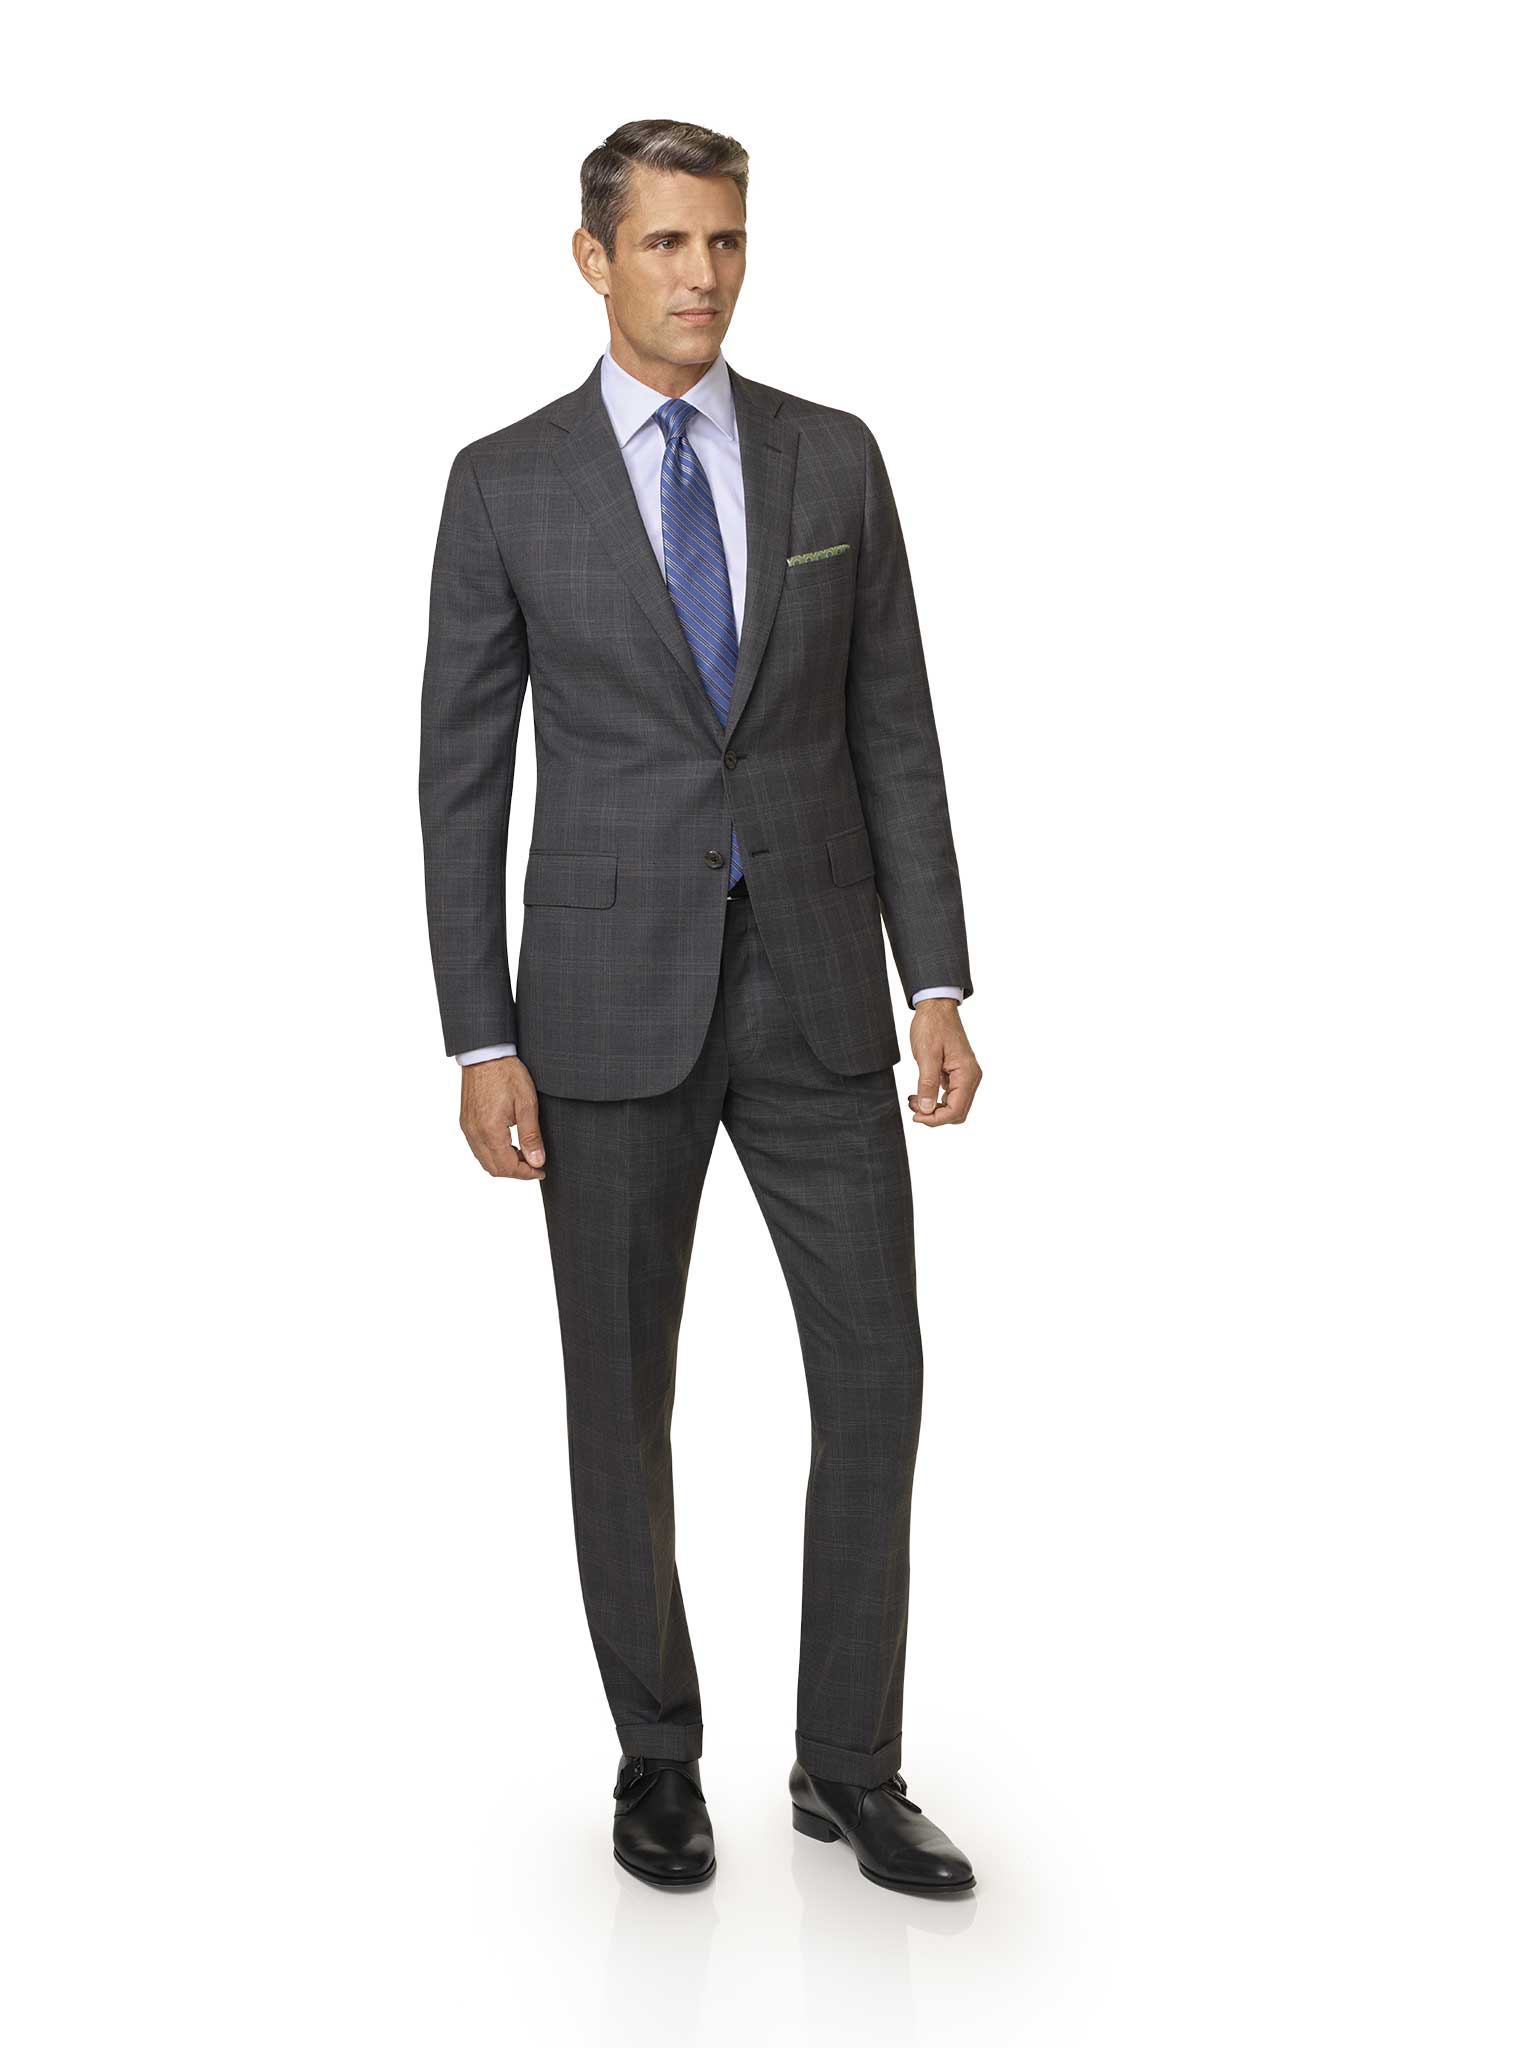 Men's Custom Clothing                                                                                                                                                                                                                                     , Gray Plaid Suit